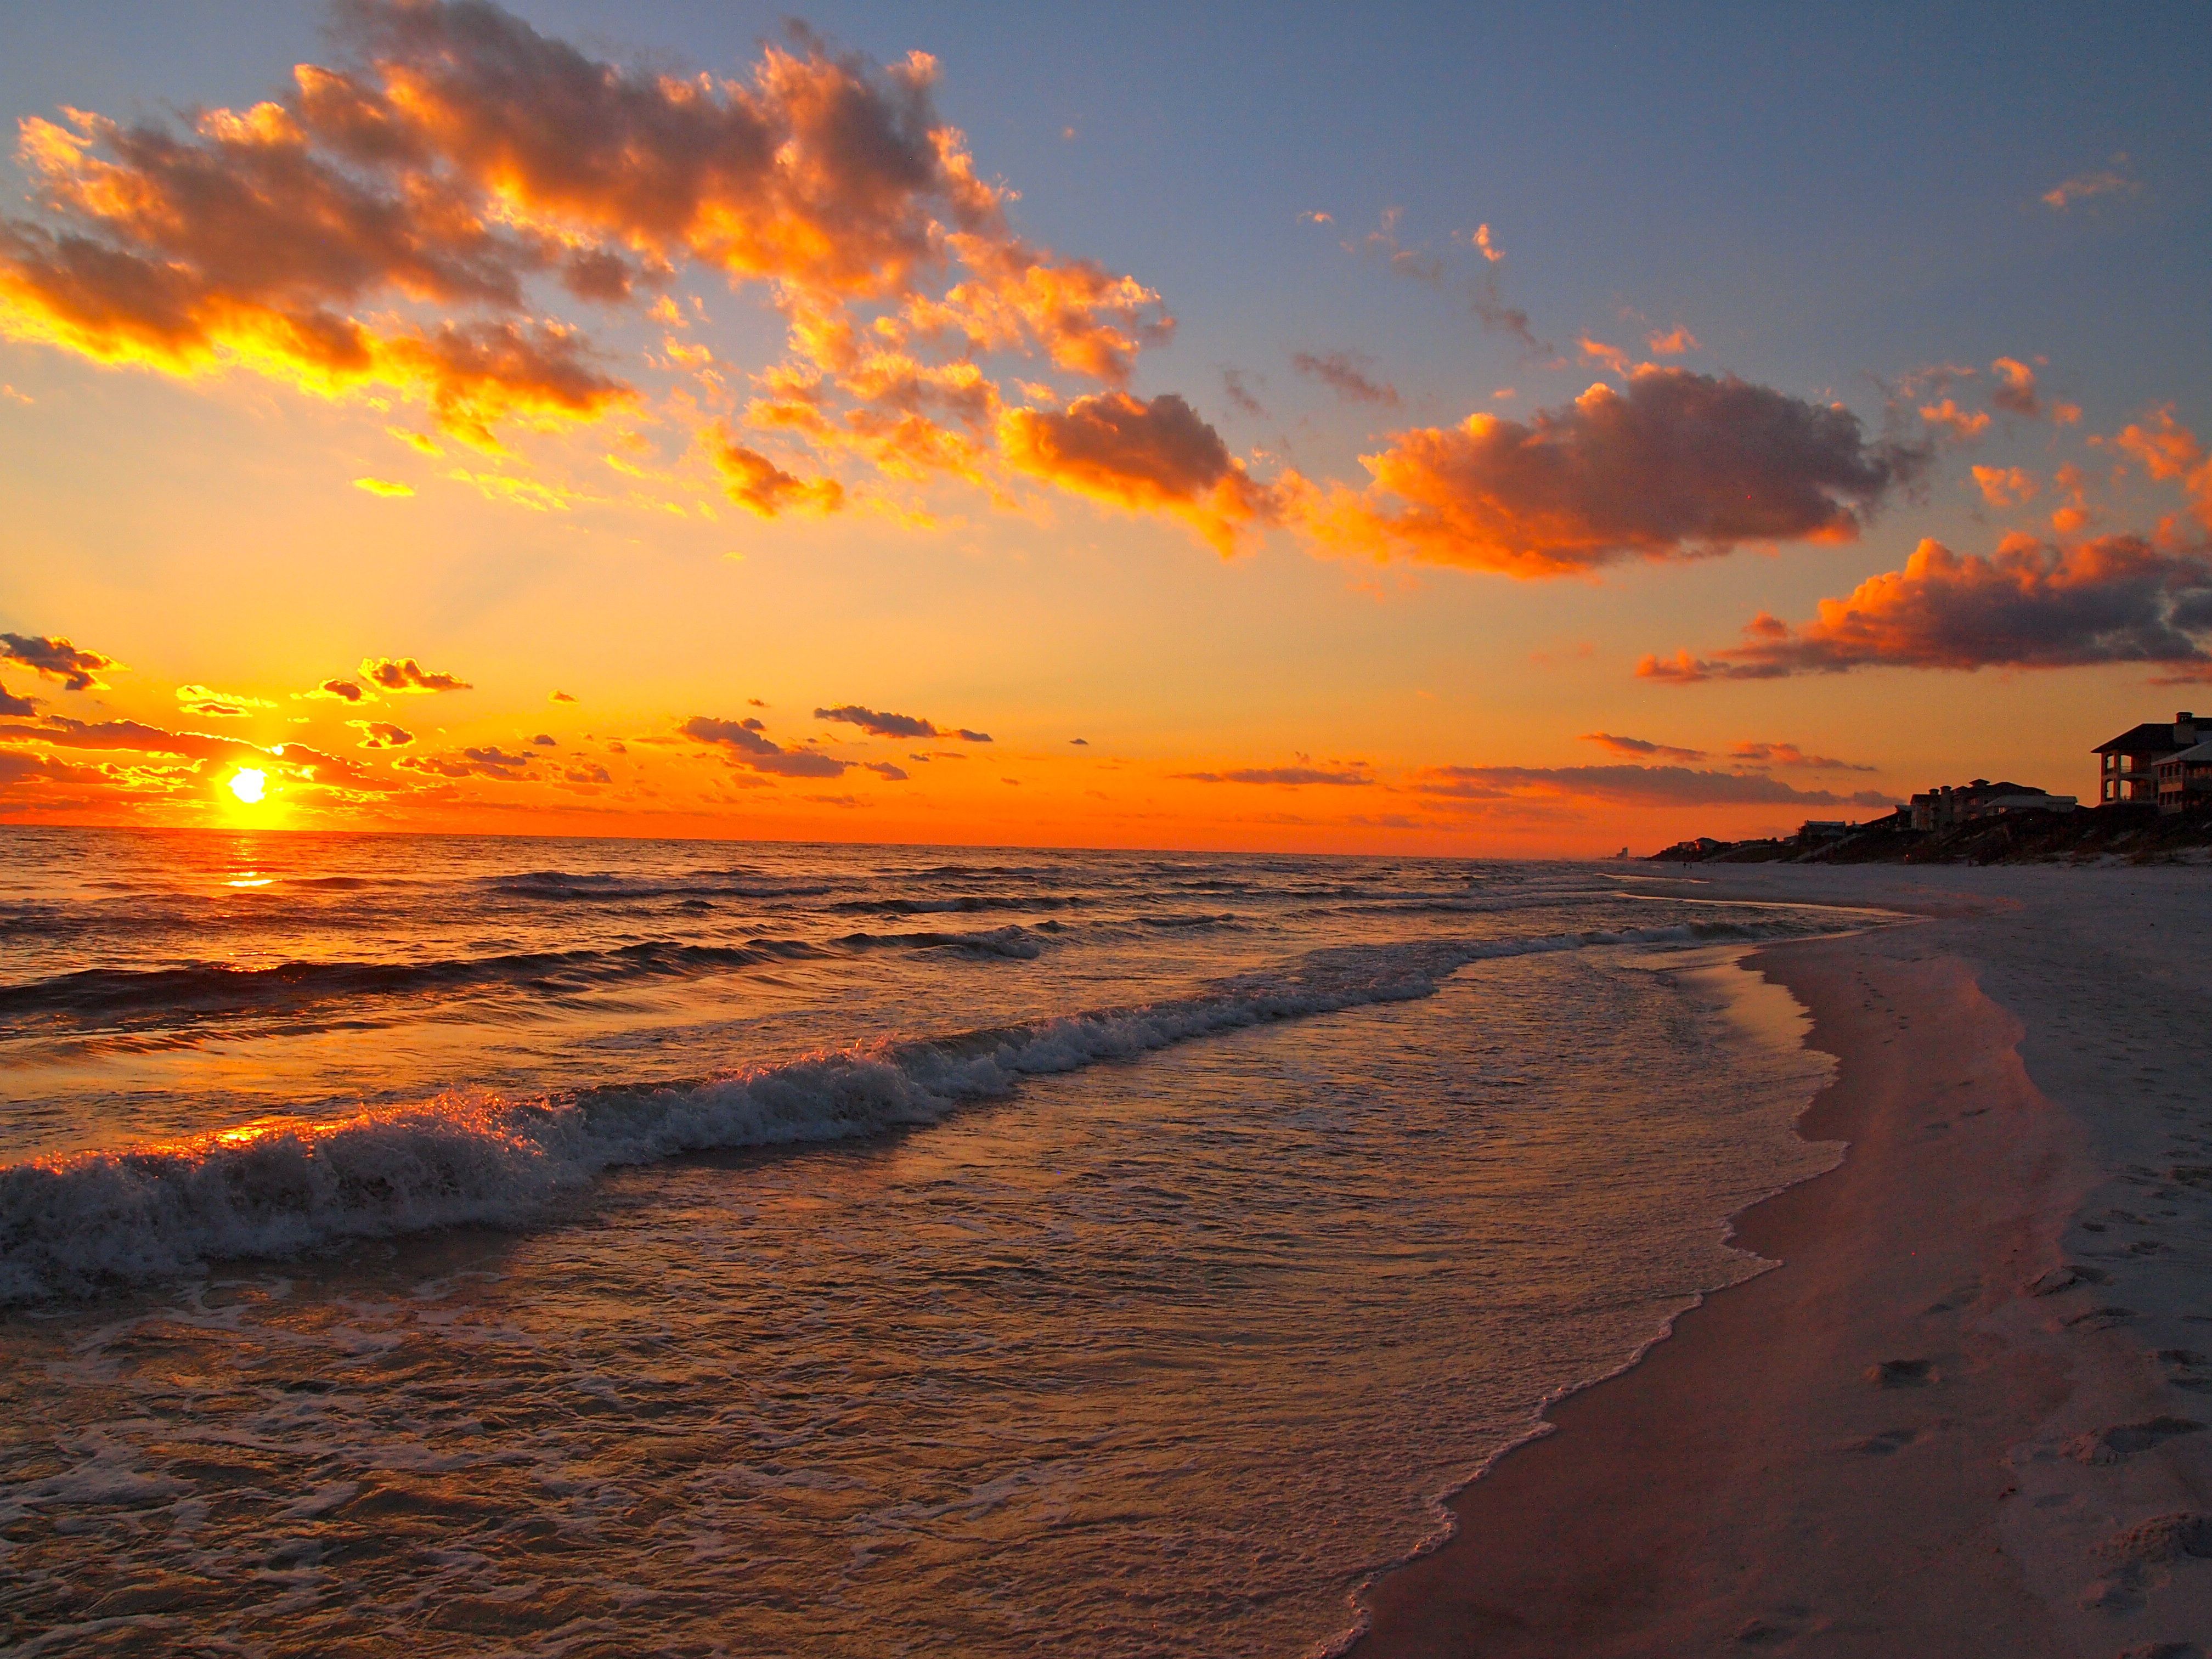 Beach Sunset Photos Download The BEST Free Beach Sunset Stock Photos  HD  Images